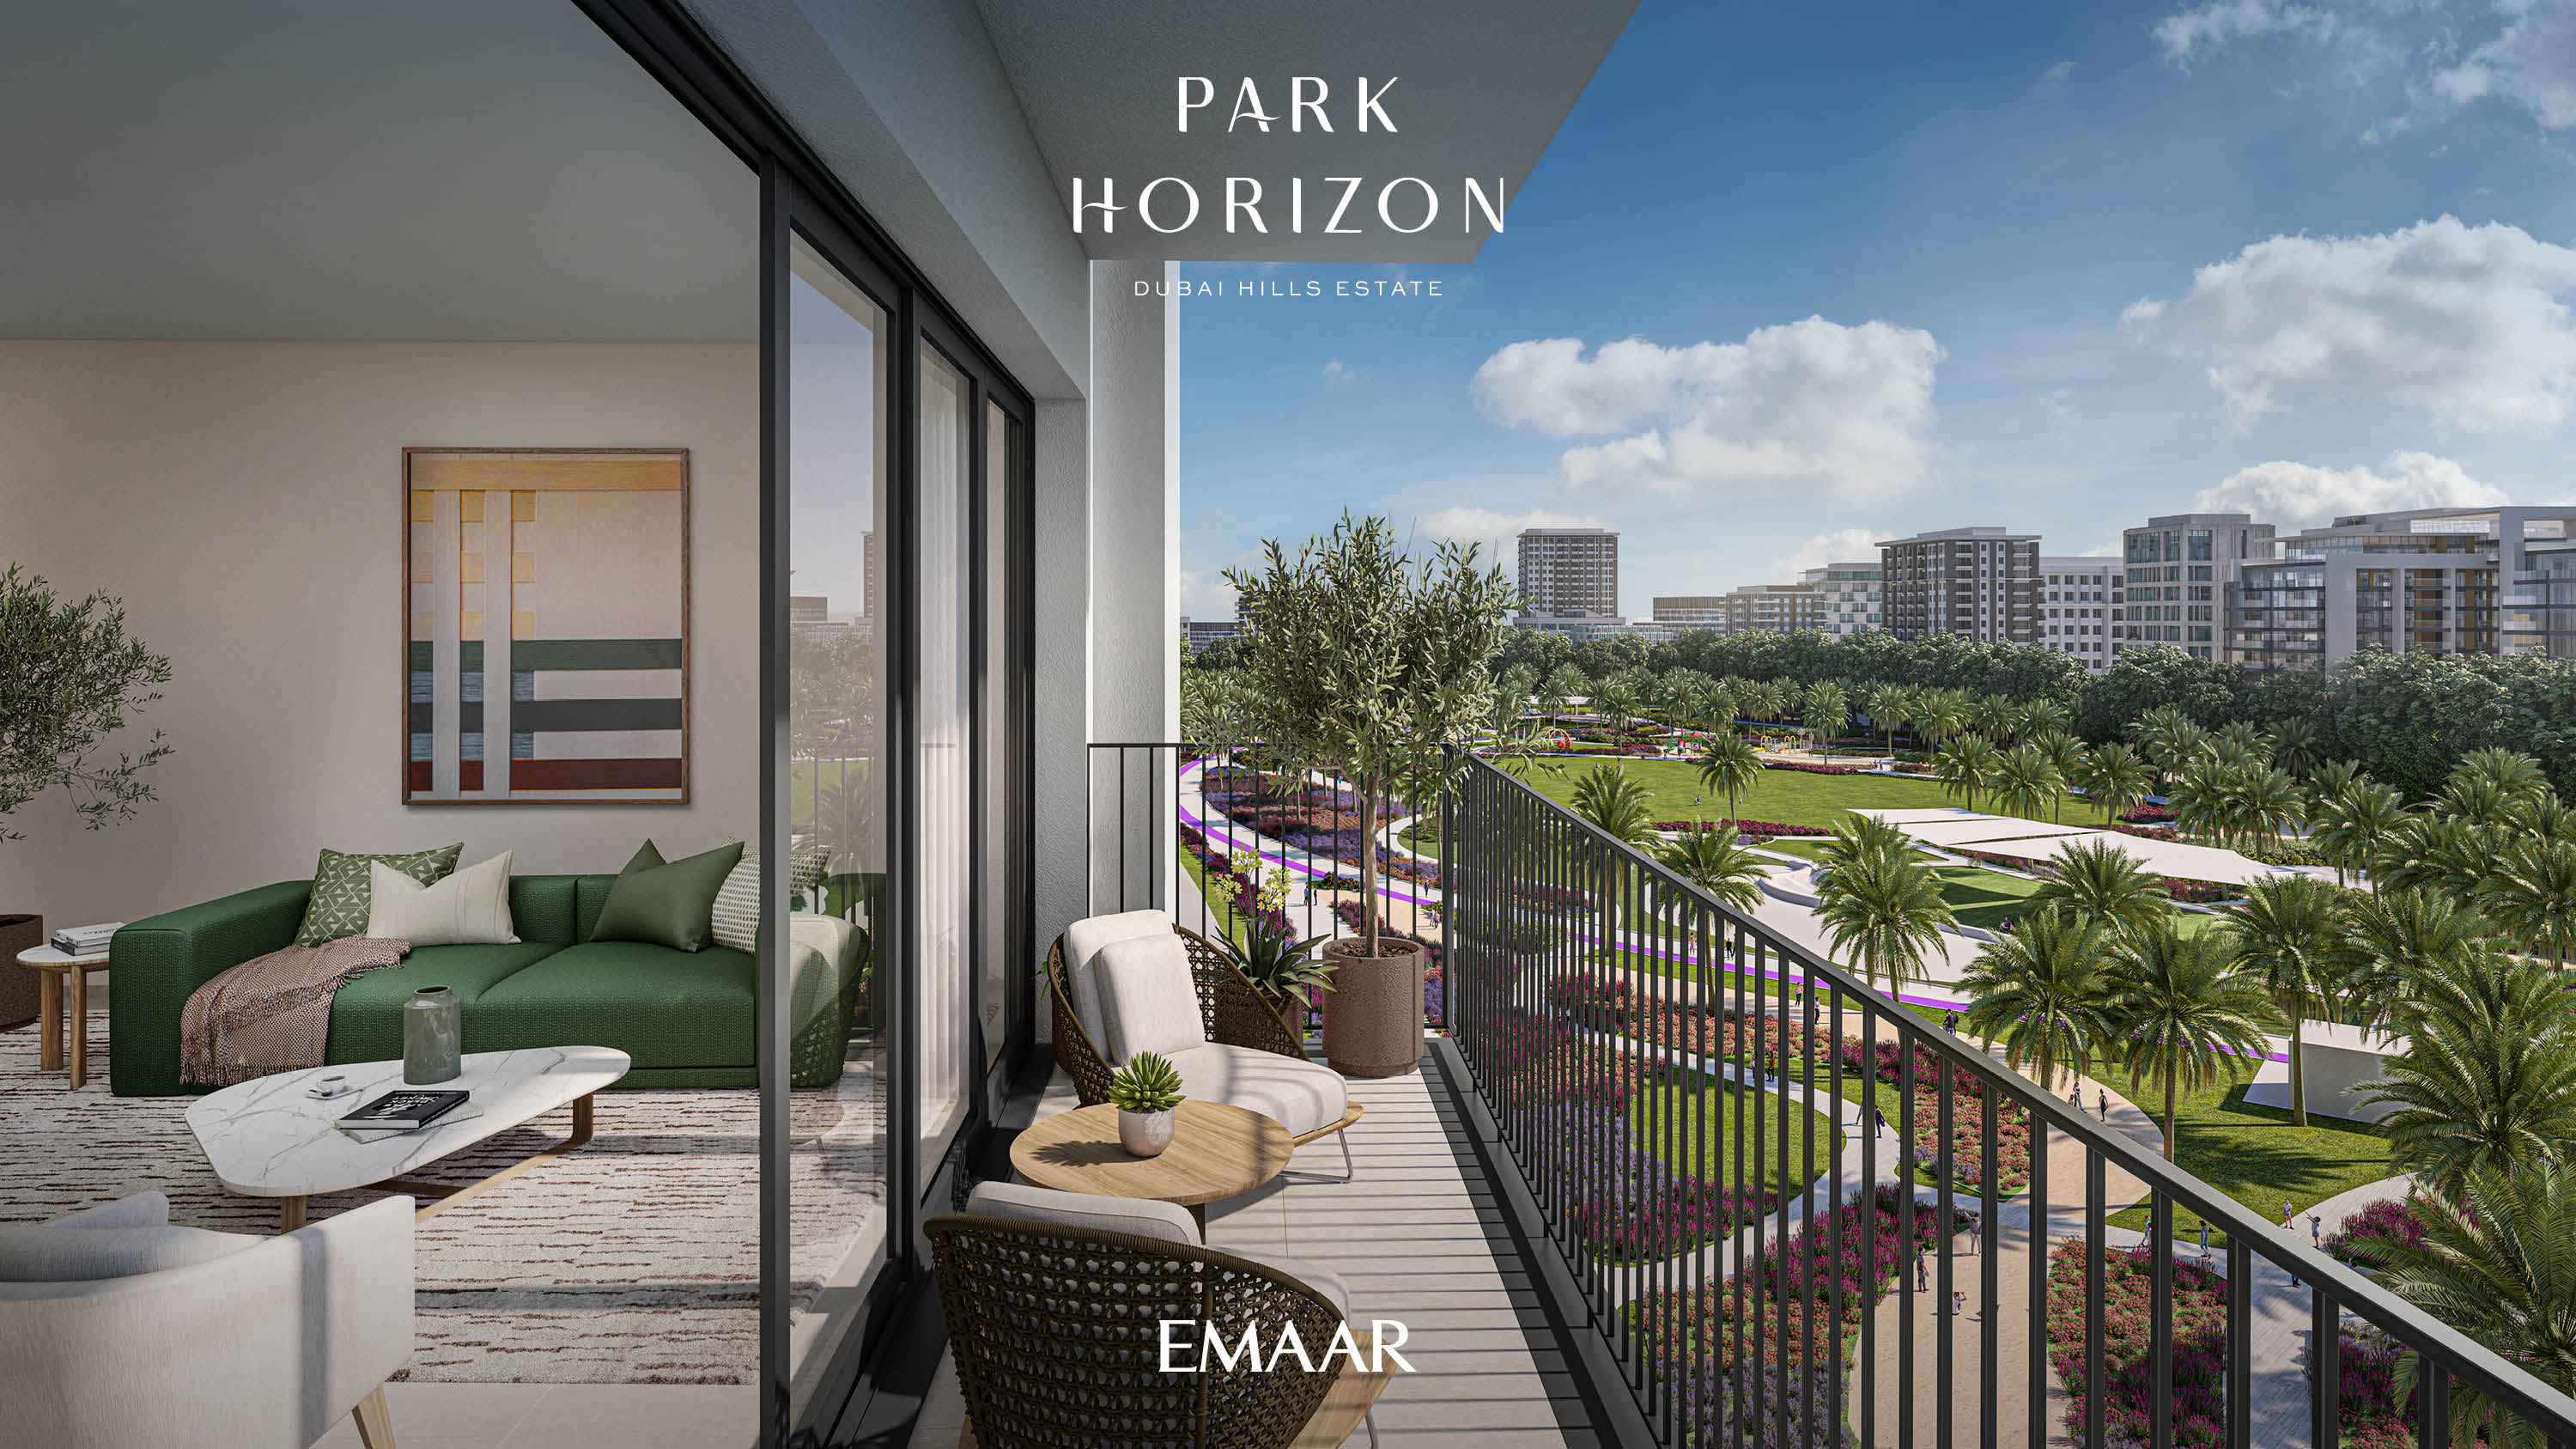 Park Horizon Dubai Hills Estate By Emaar